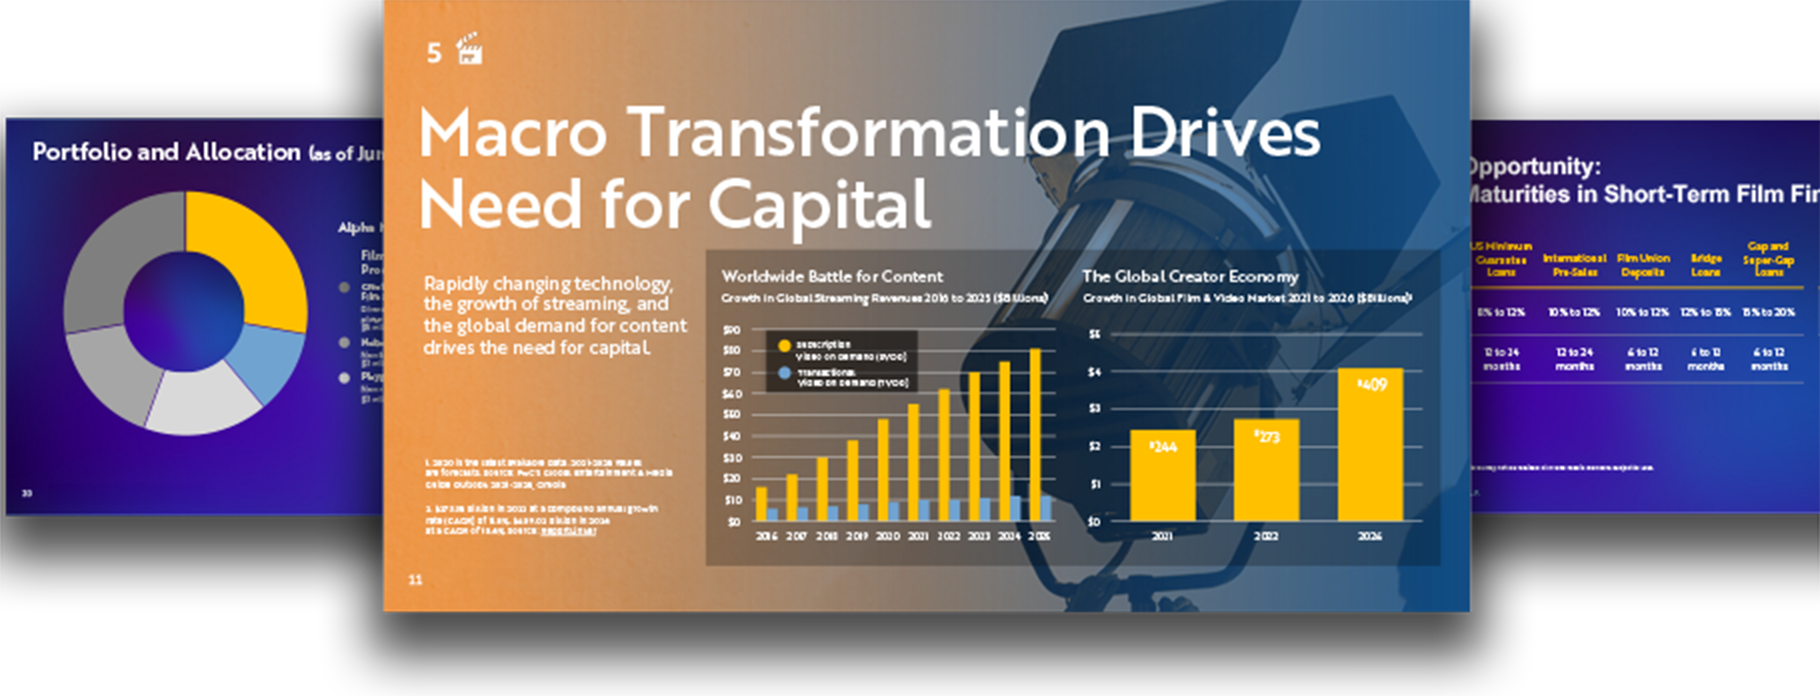 Macro transformation drives need for capital